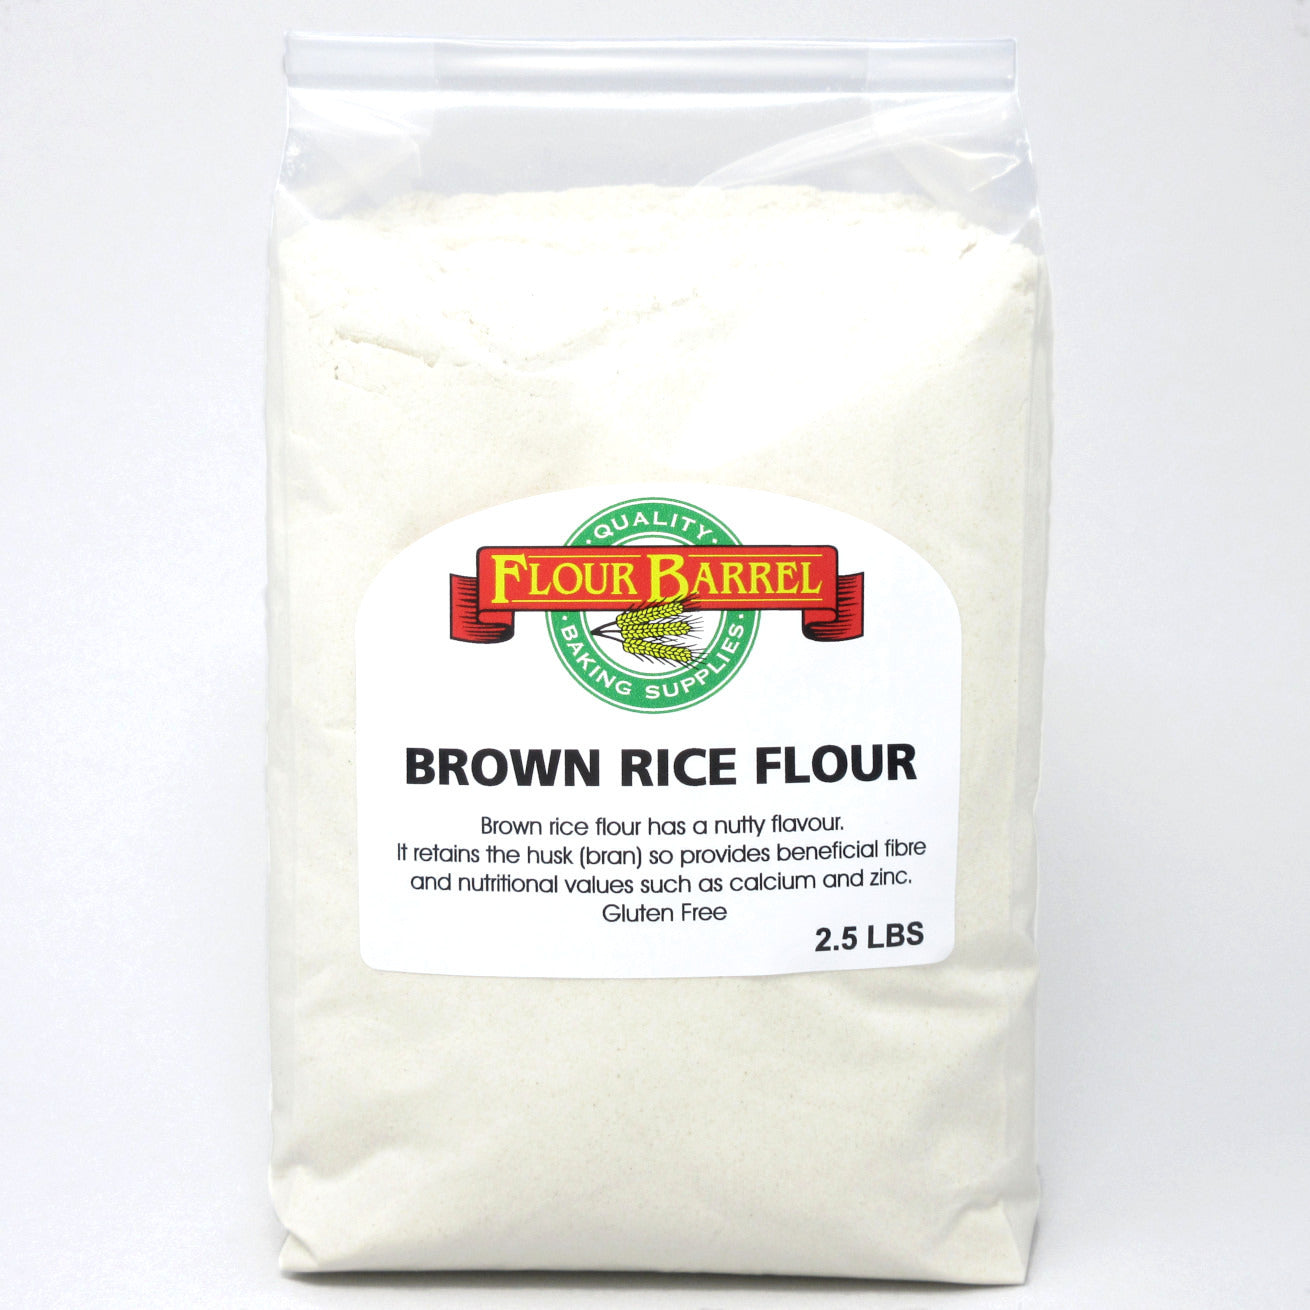 Flour Barrel product image - Brown Rice Flour